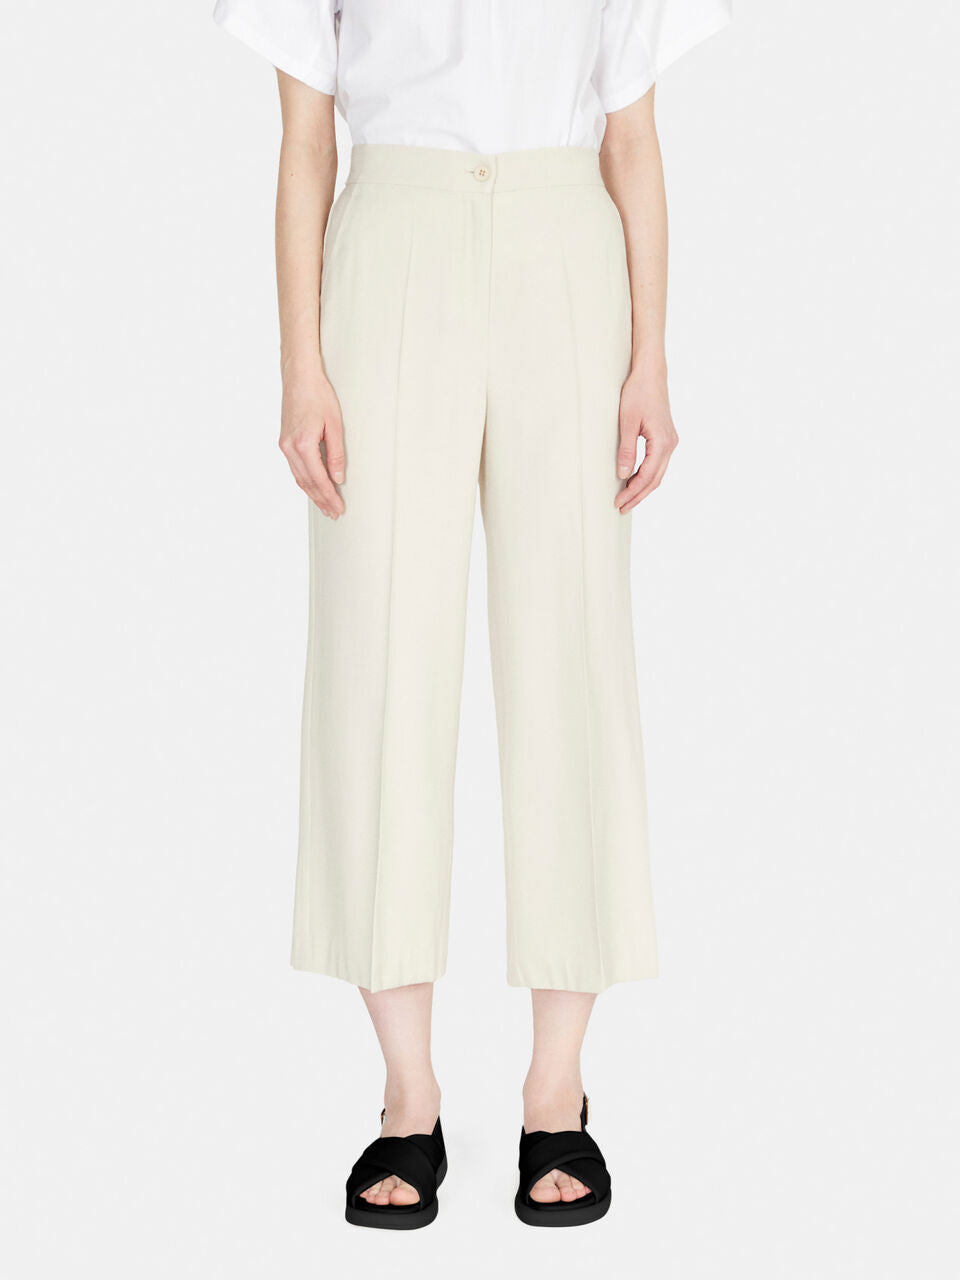 Sisley Cropped High-Waisted Trousers - Beige